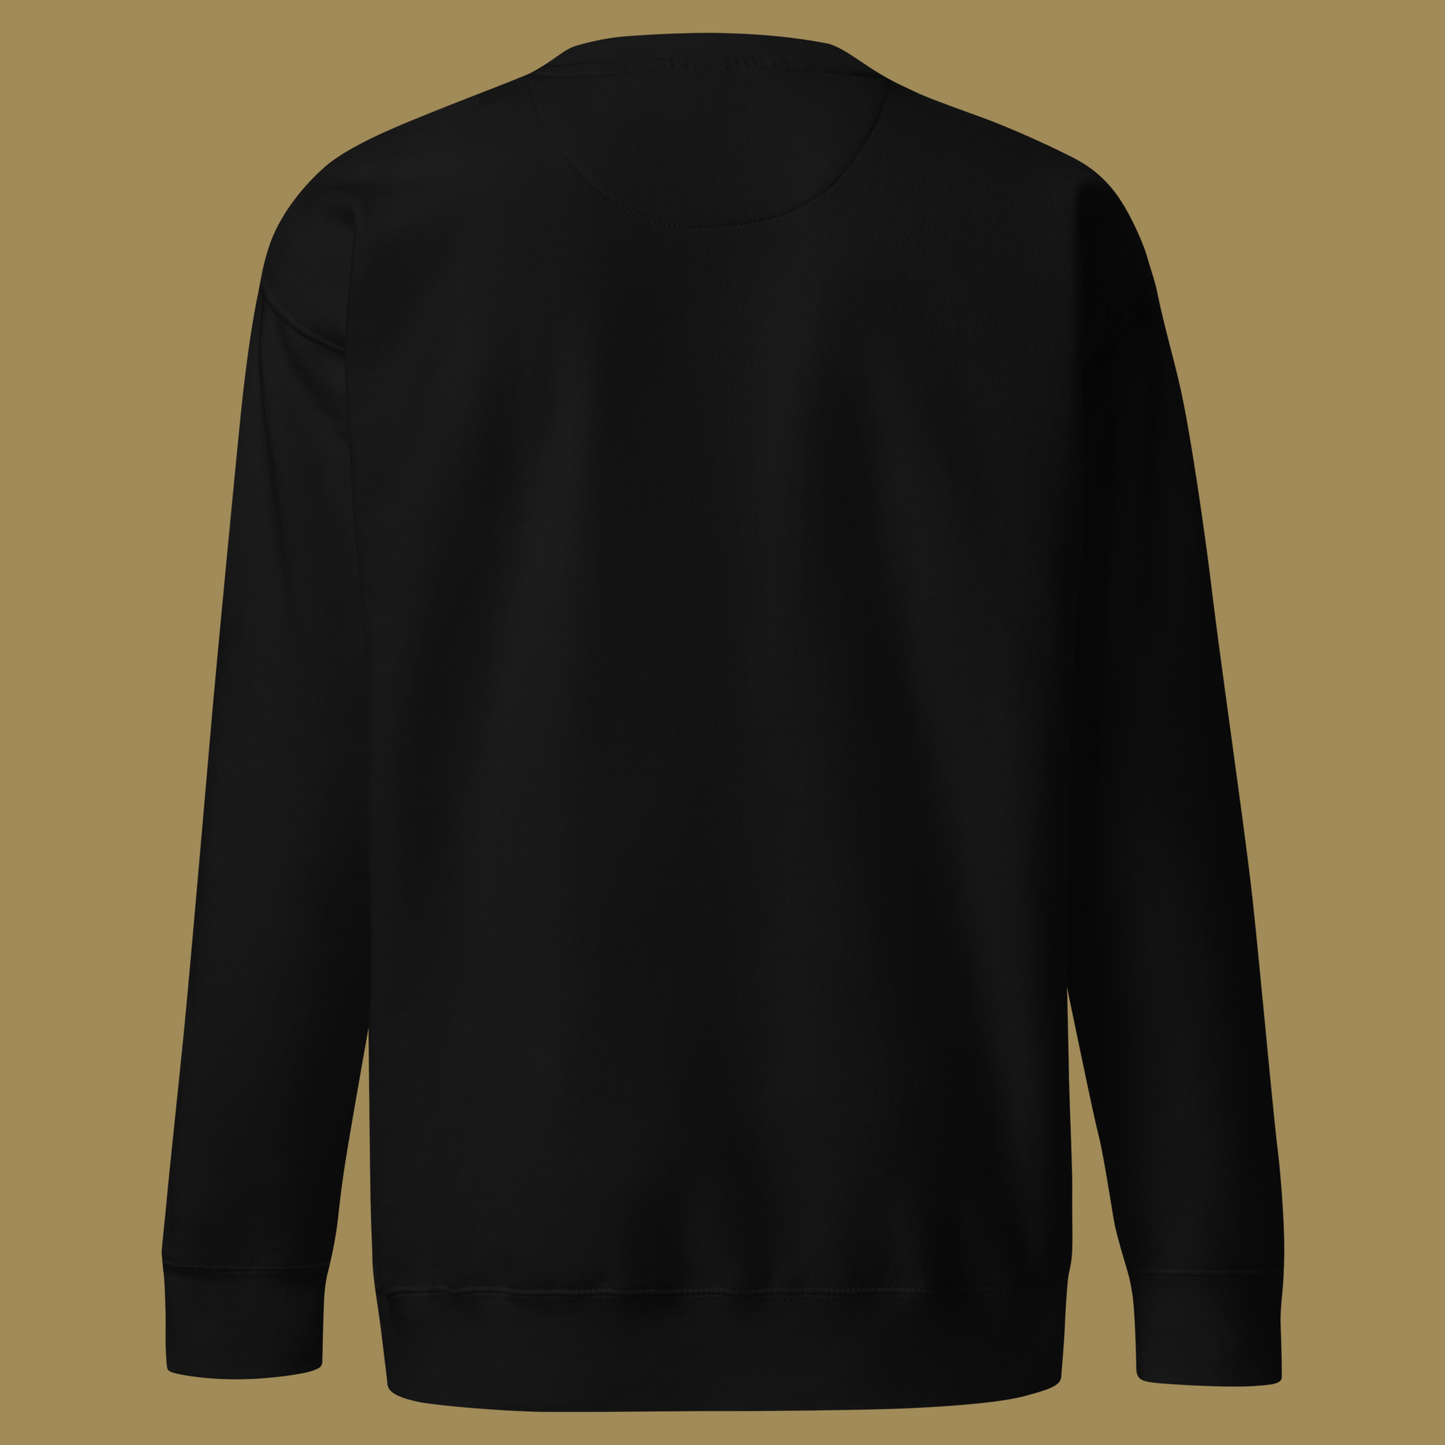 ECSTATIC Embroidered Premium Sweatshirt